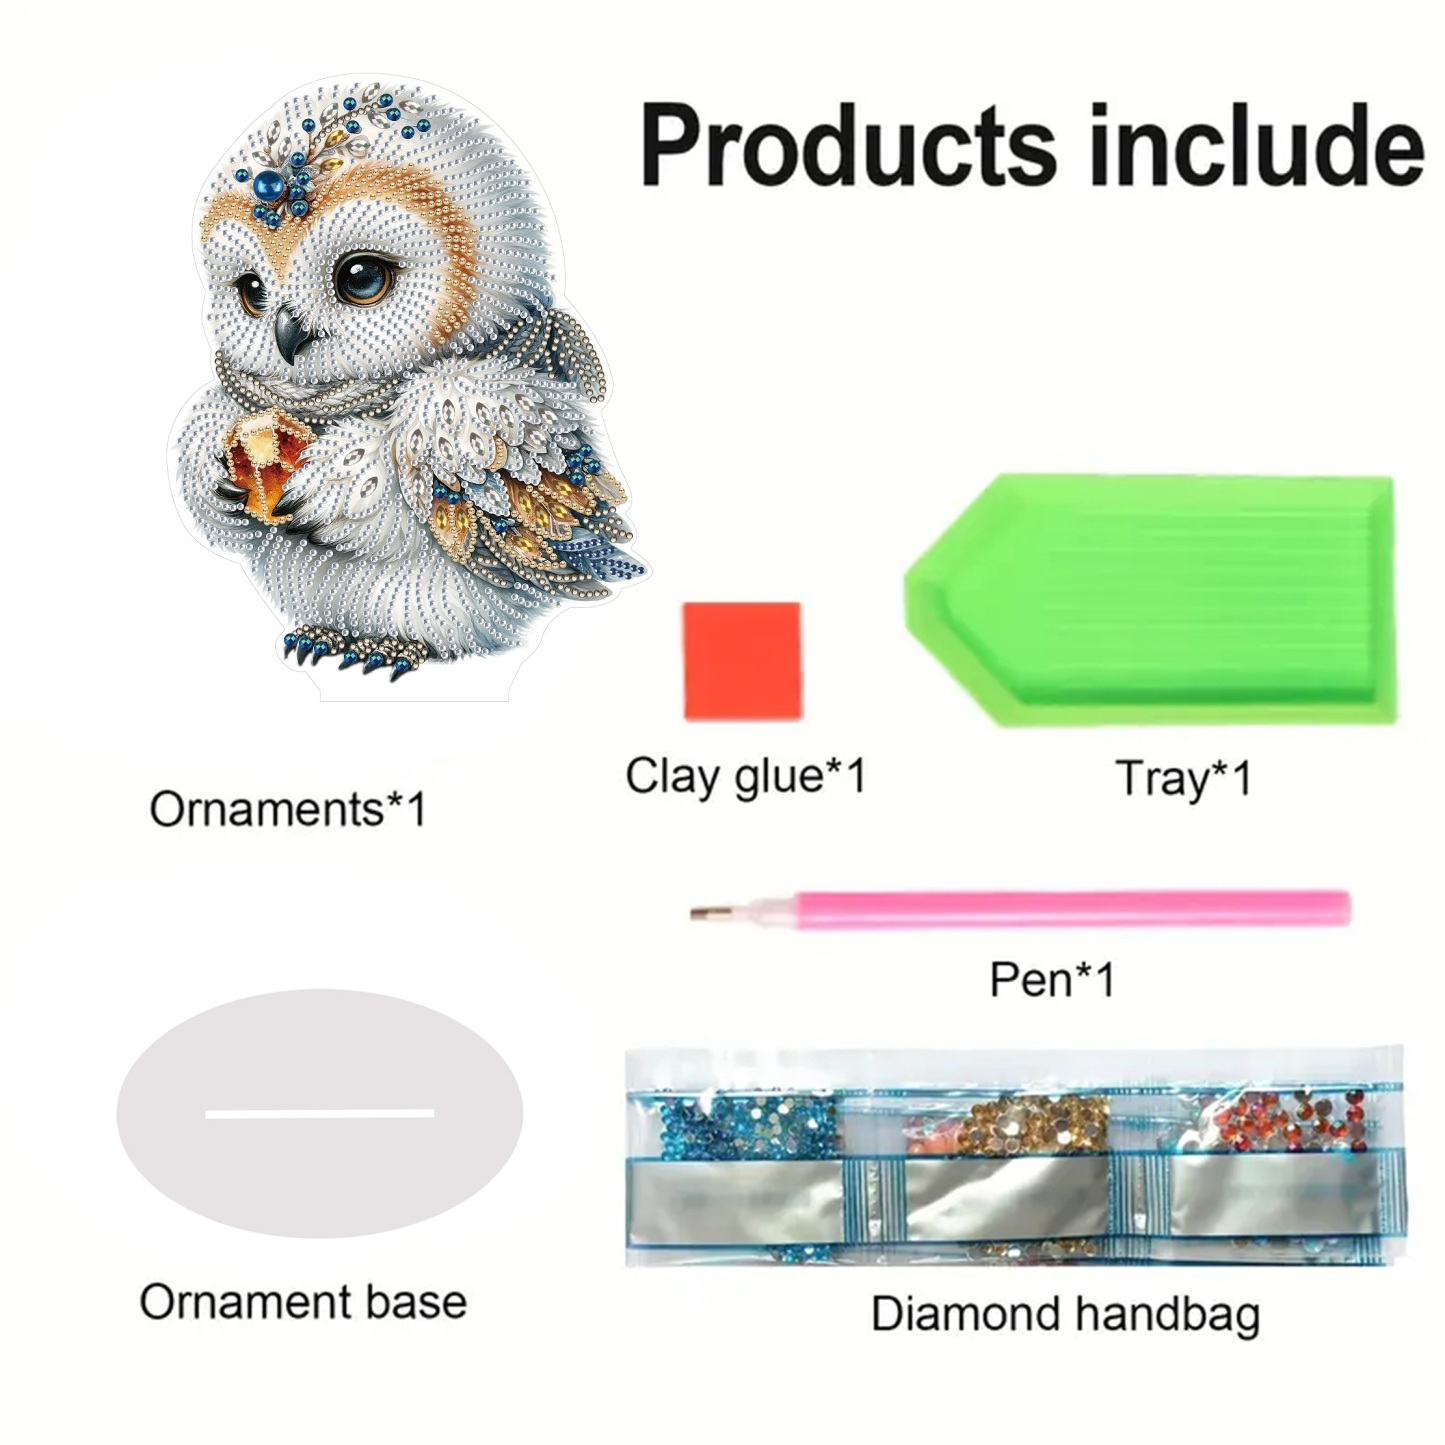 5D DIY Special Shape Diamond Painting Desk Ornament Owl Decor Kit